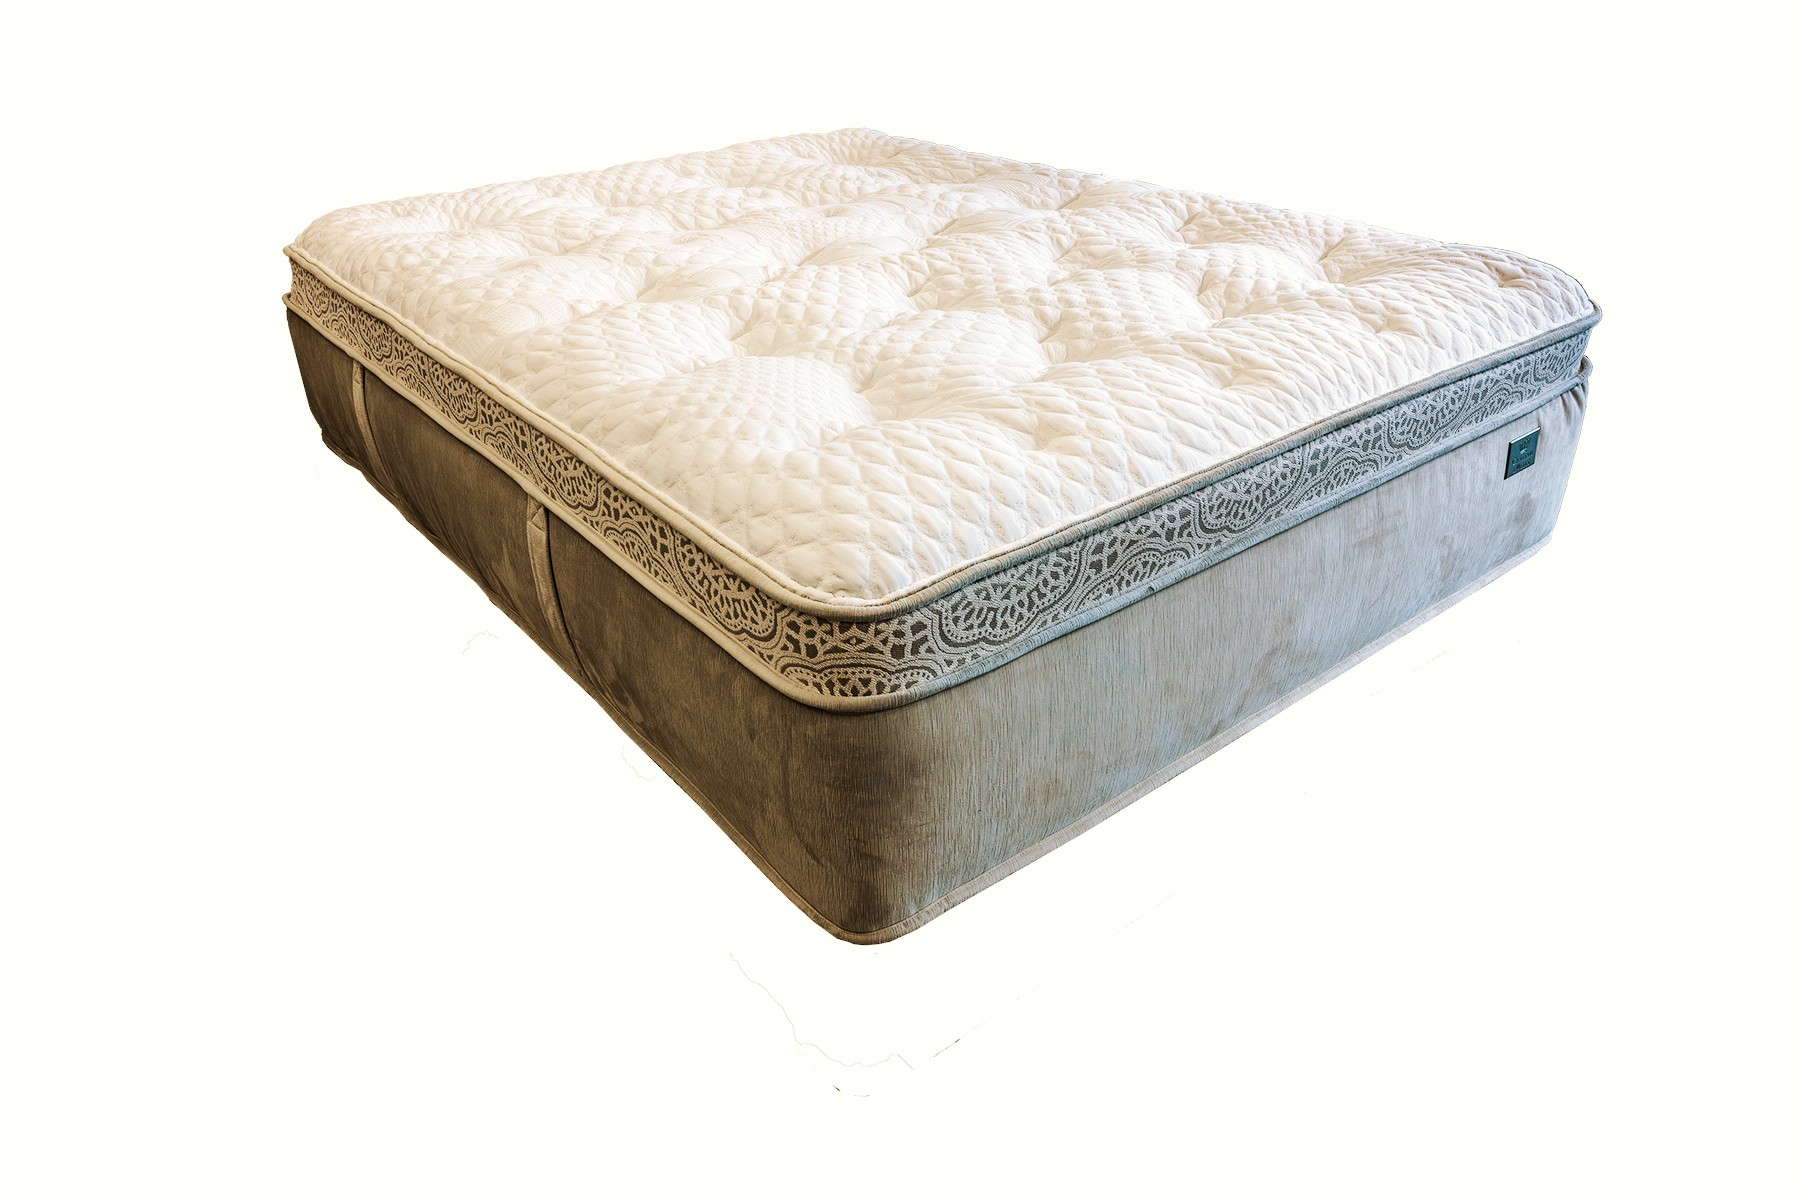 chattam and wells mattress prices